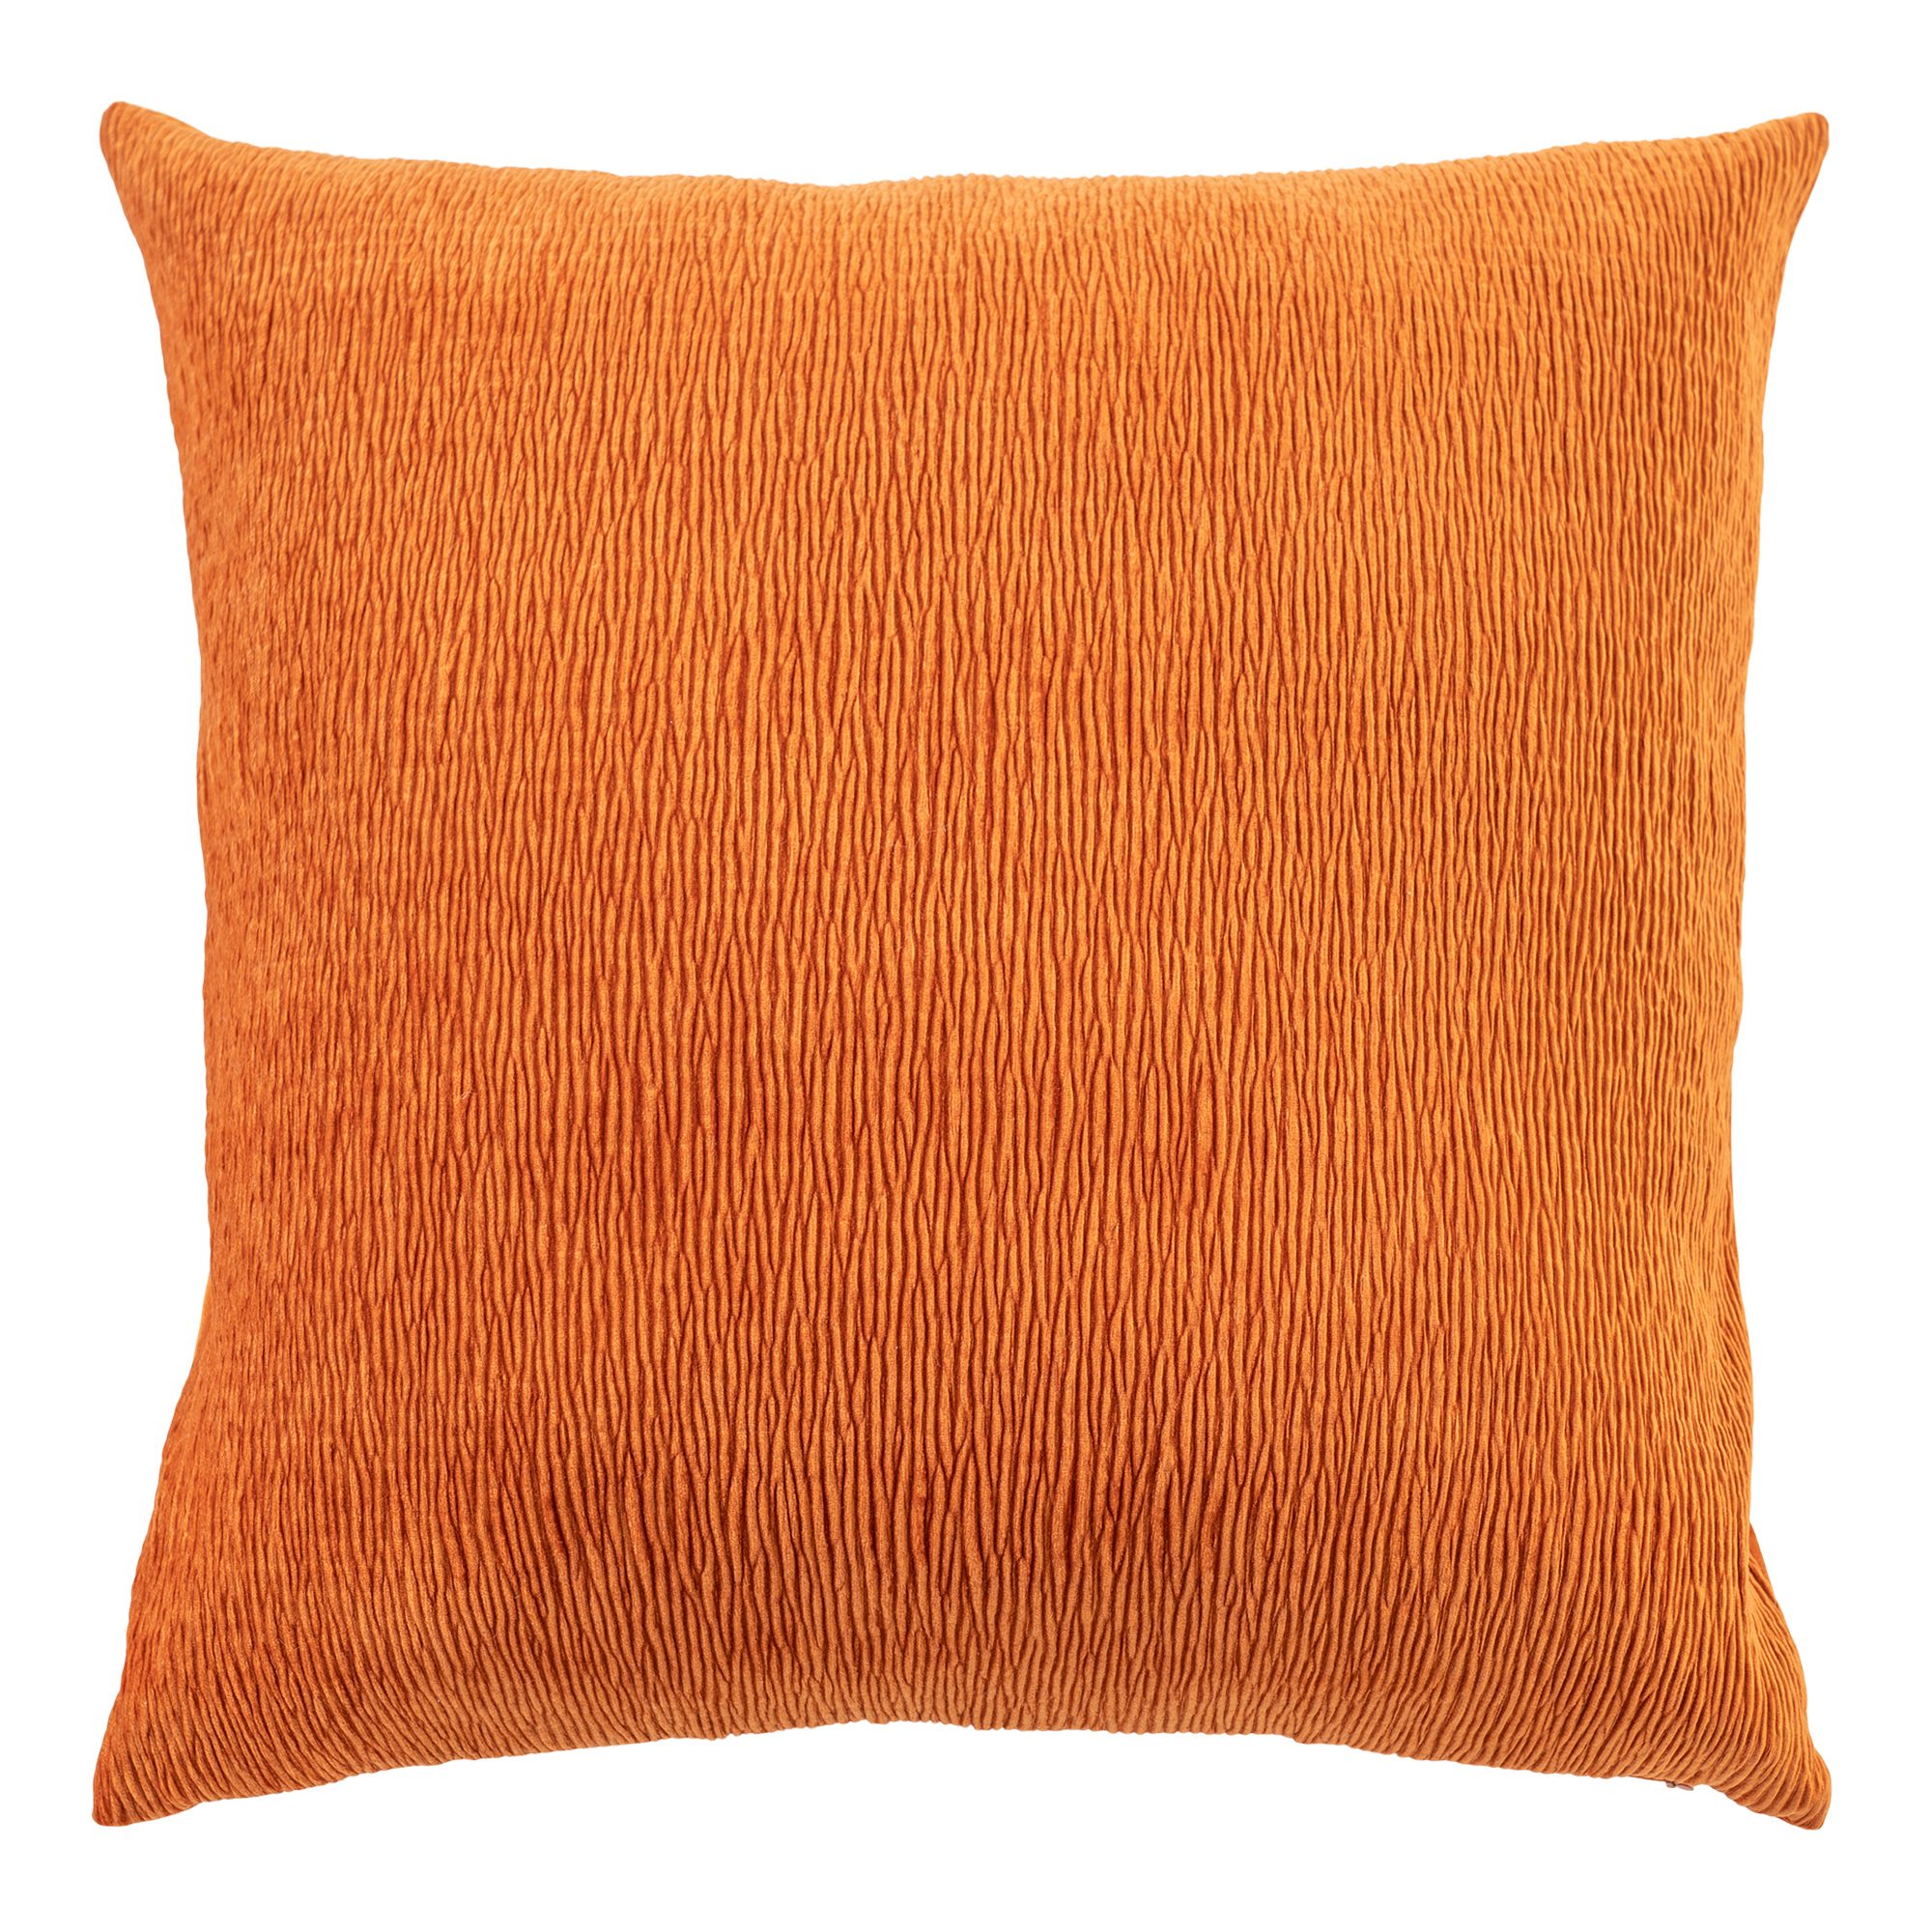 Cento Cushion - Cushion in burned orange  45x45 cm